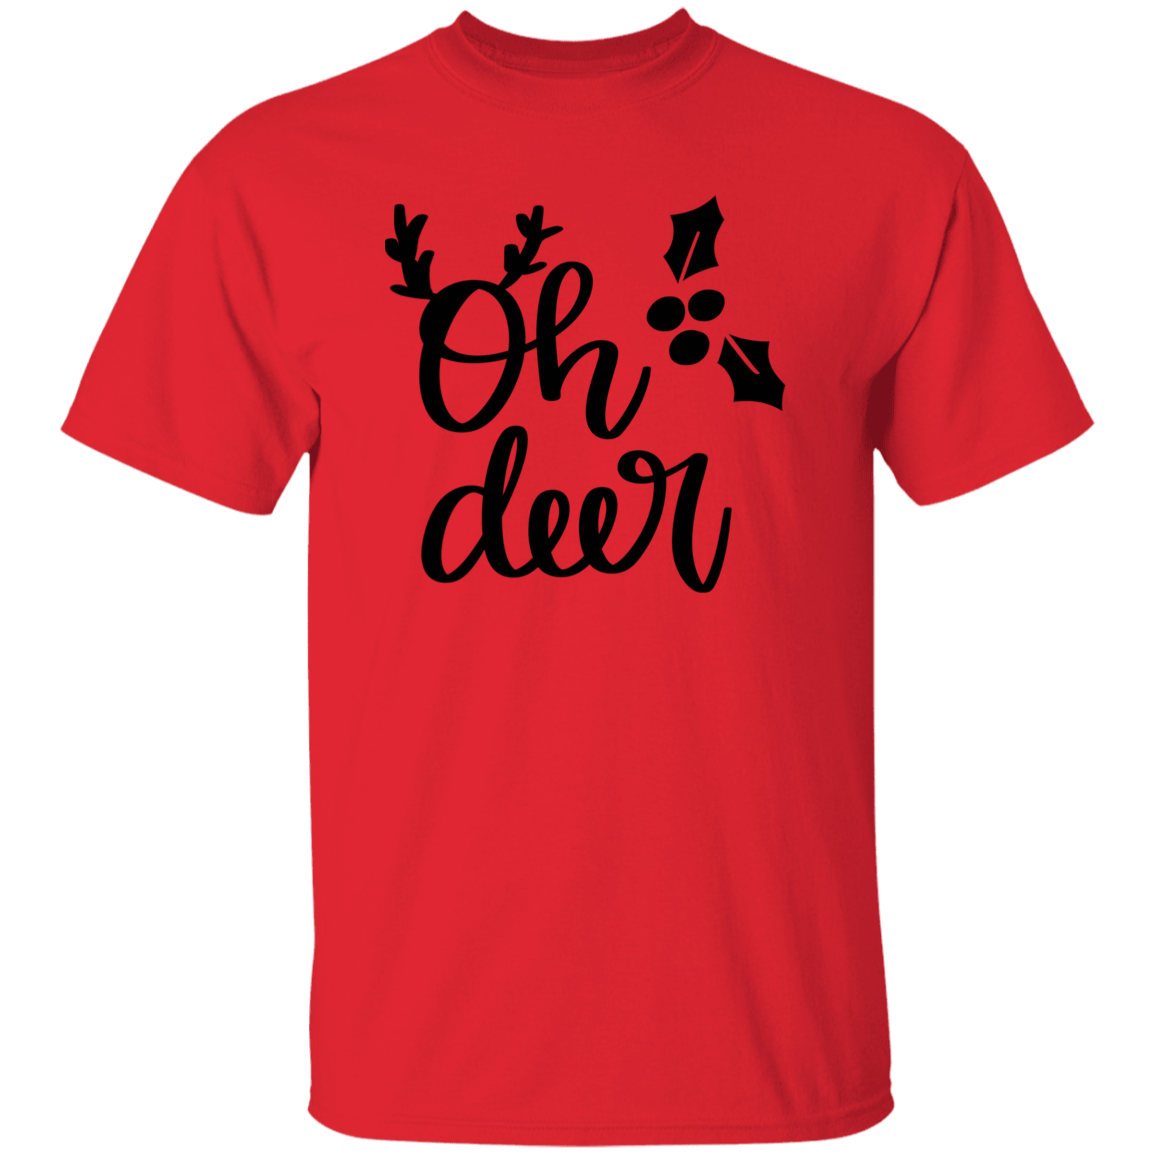 Oh Deer 5.3 oz. T-Shirt